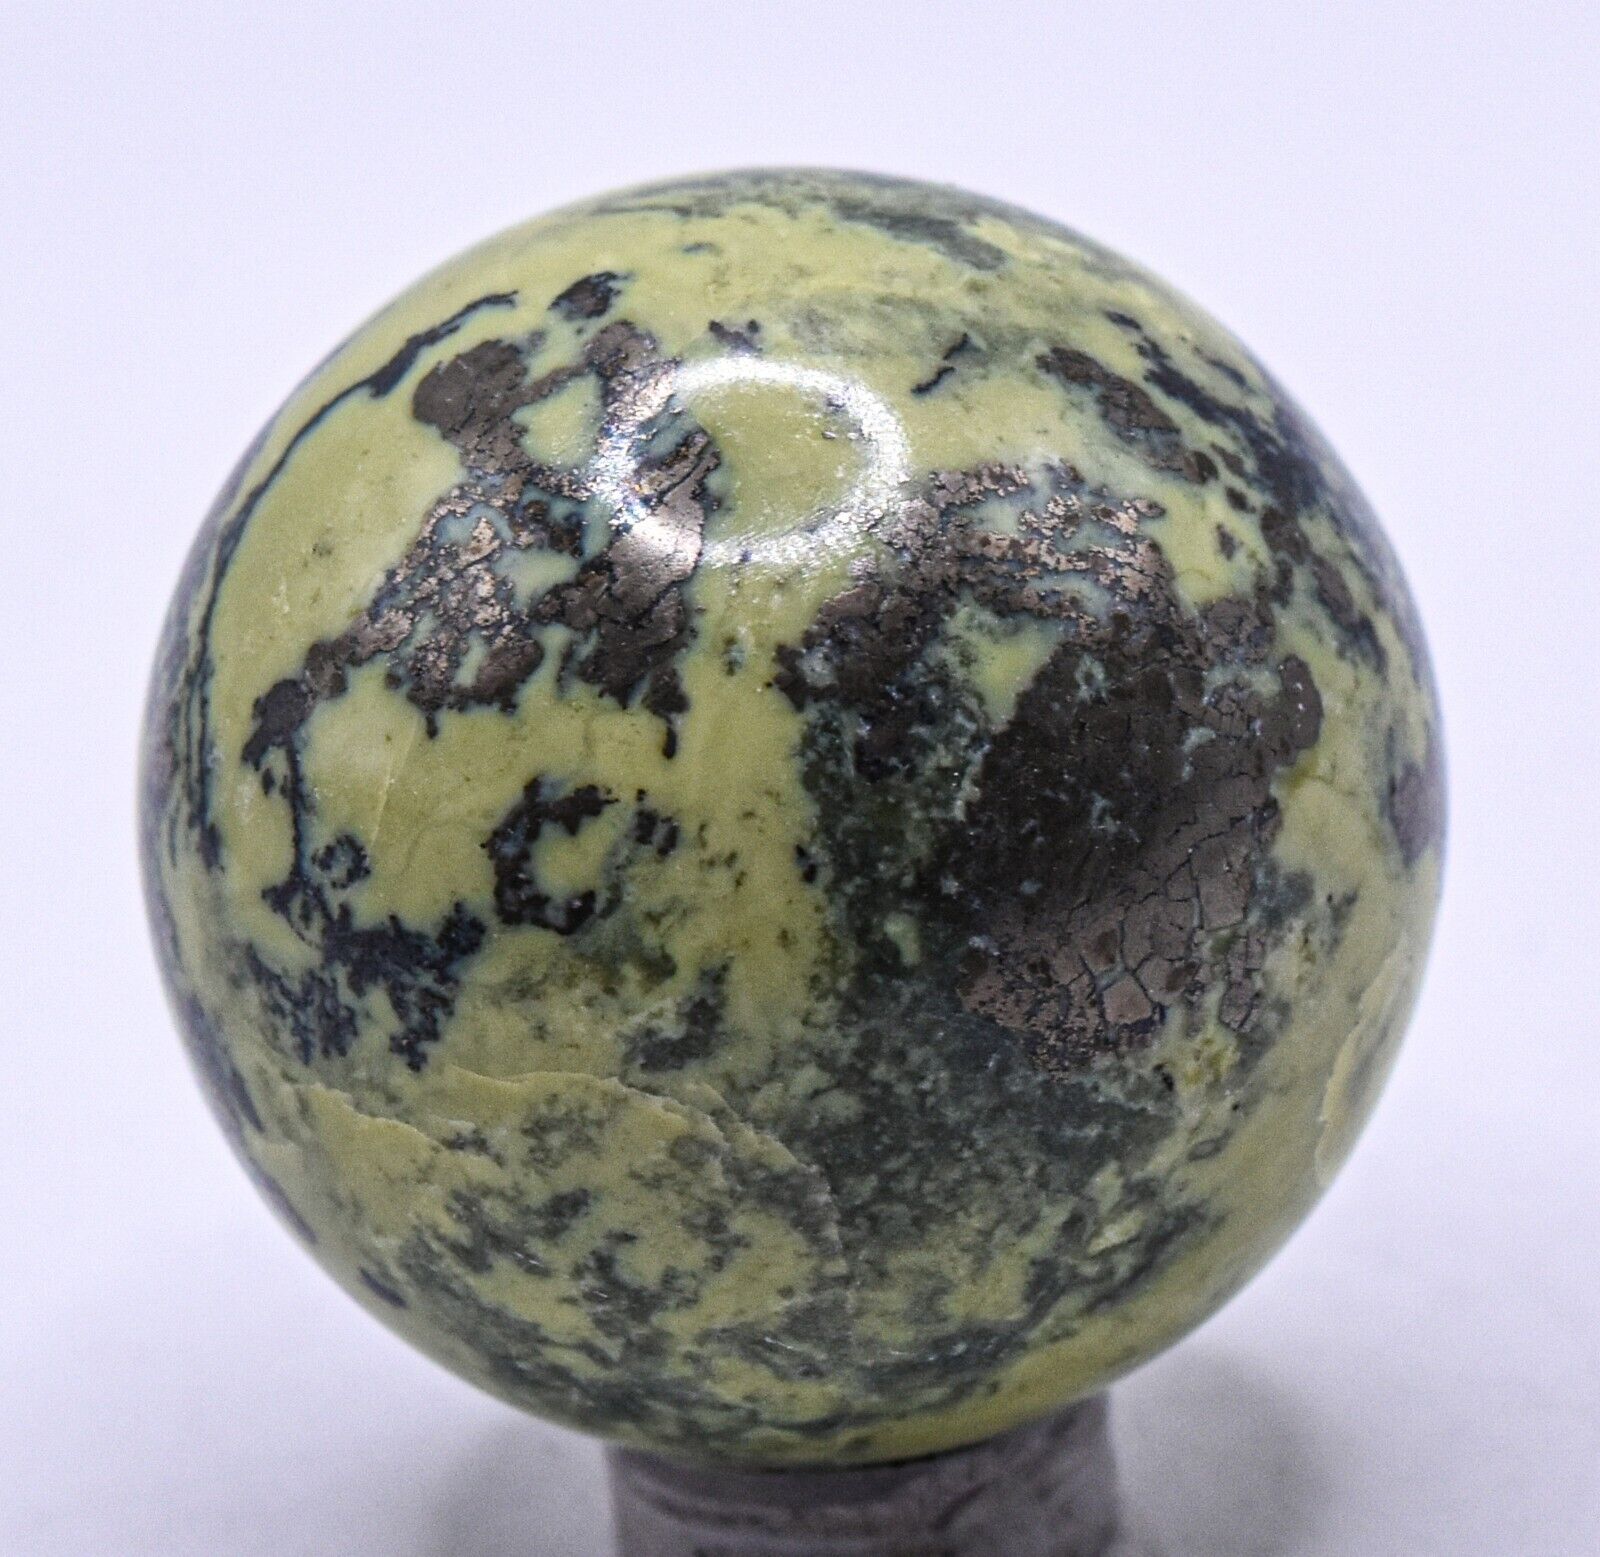 39mm Serpentine w/ Golden Pyrite Sphere Polished Gemstone Crystal Mineral - Peru